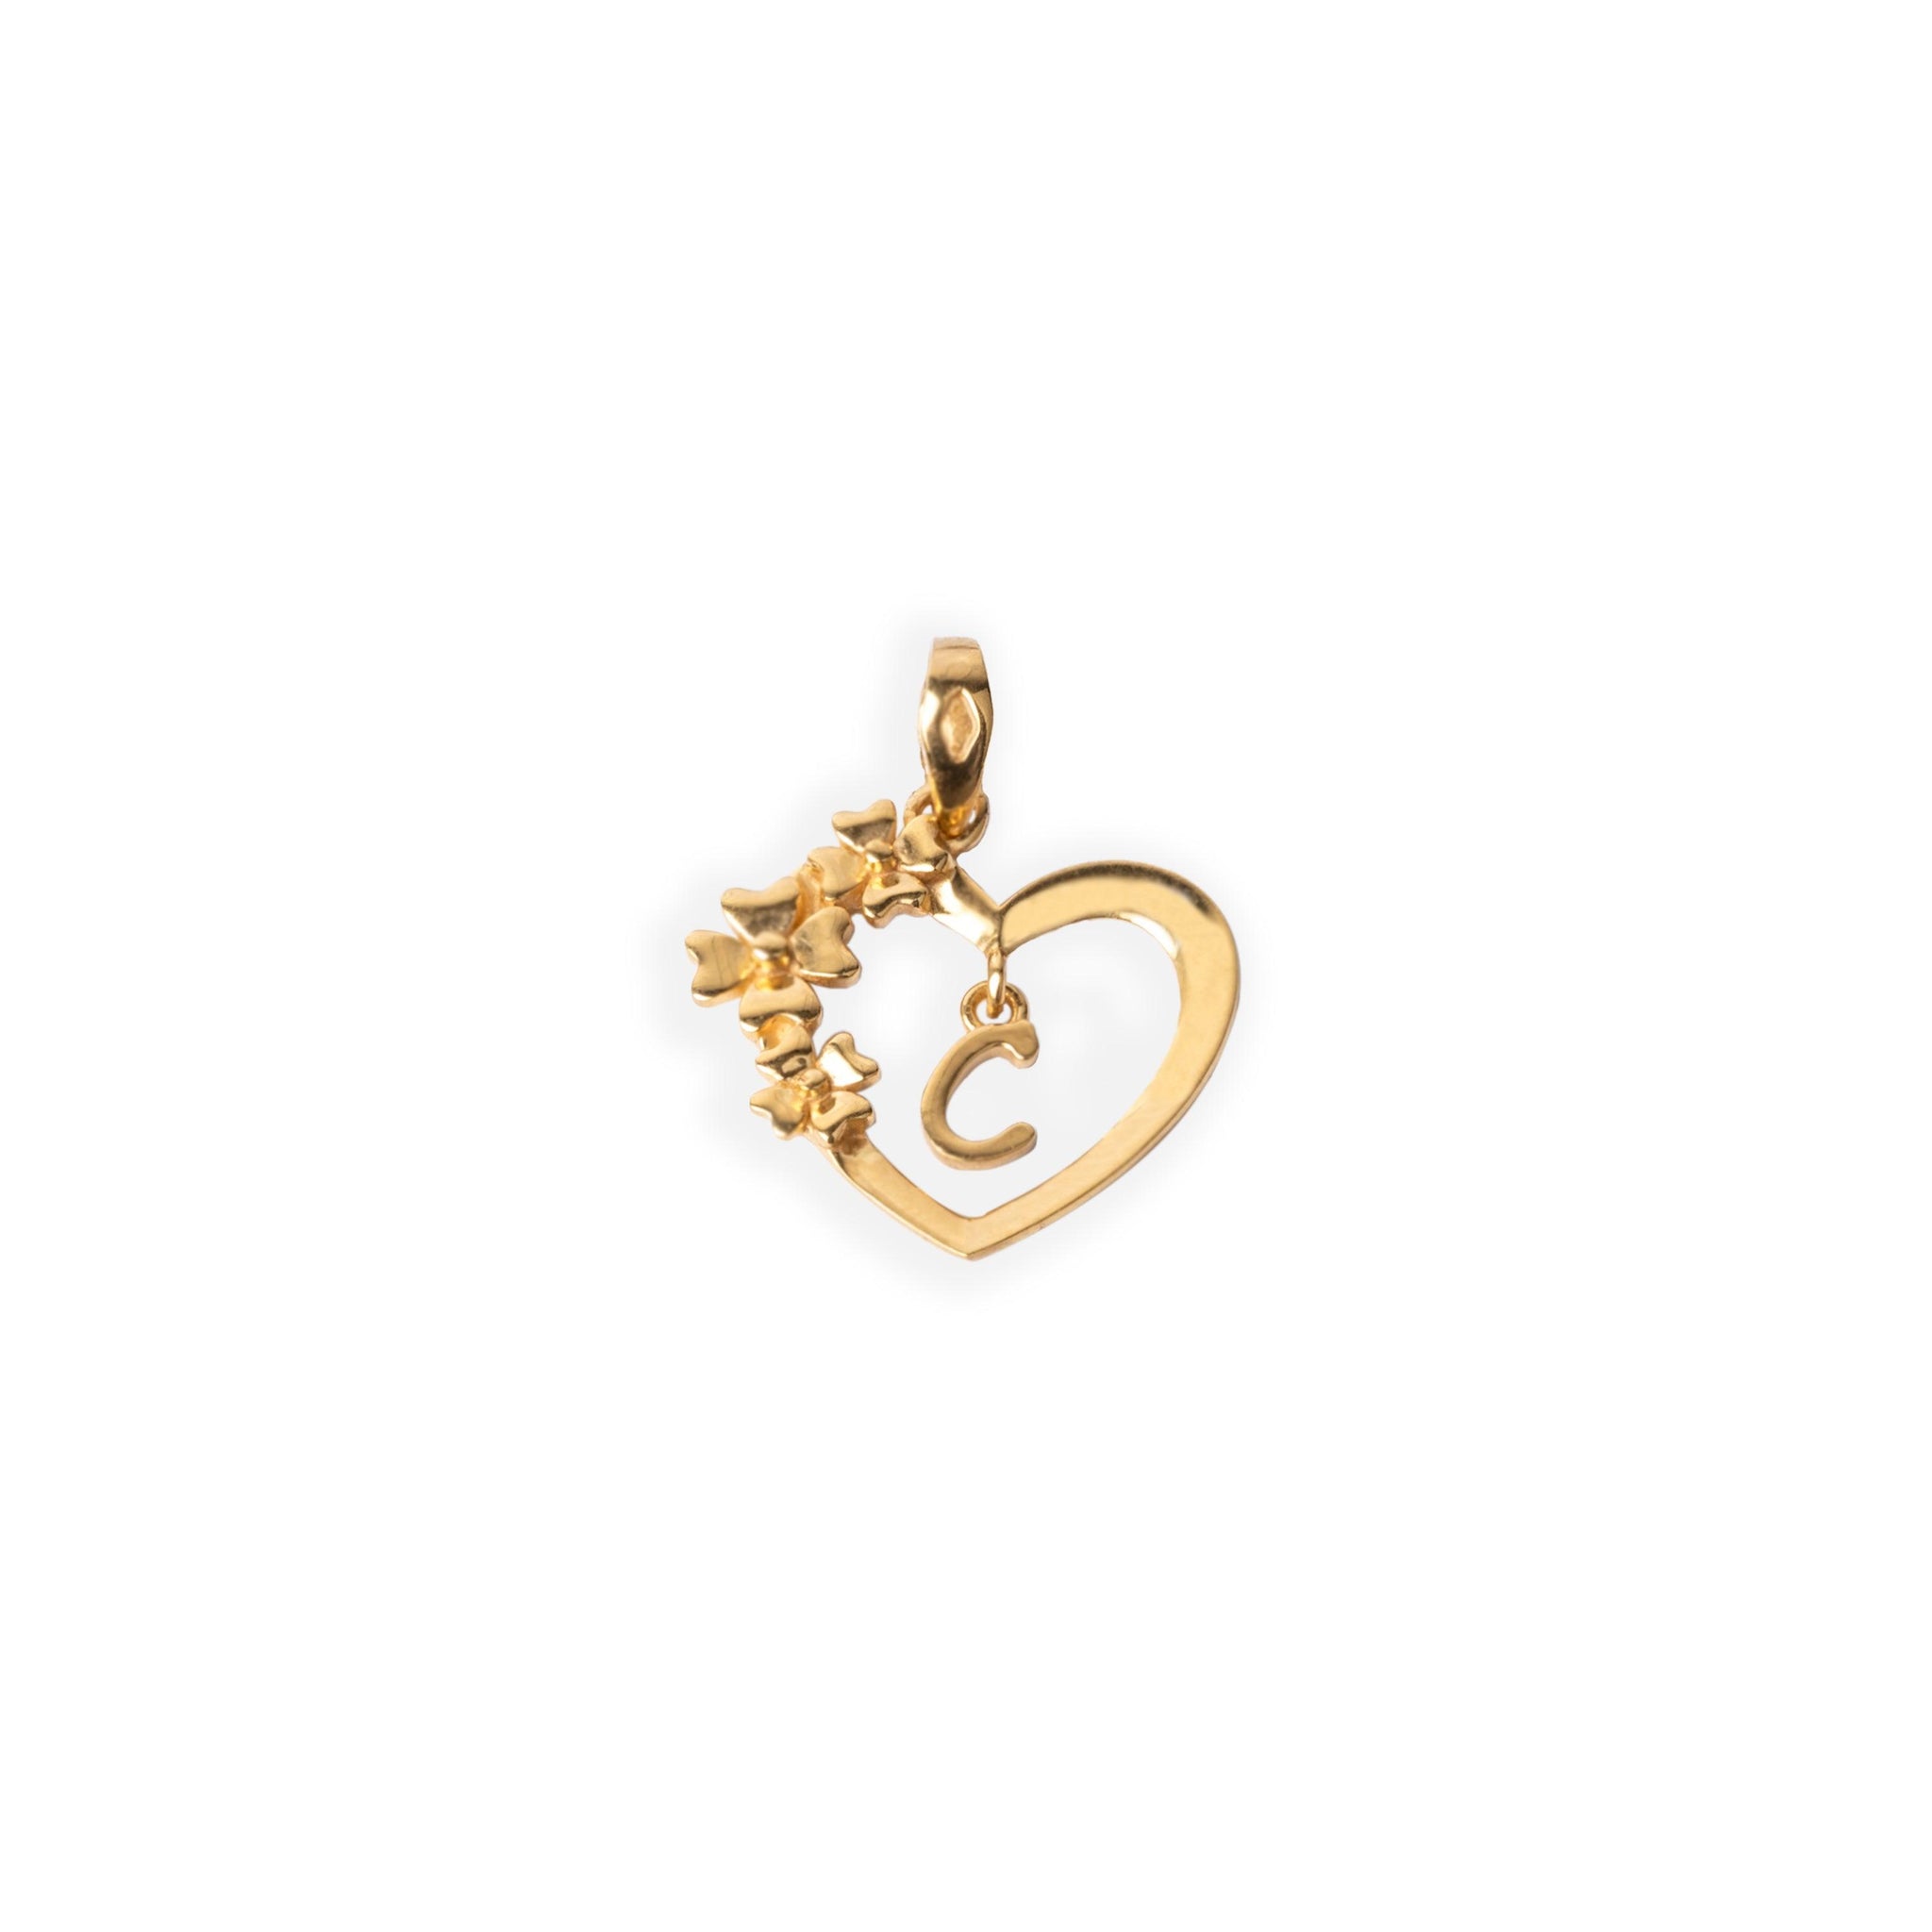 'C' 22ct Gold Heart Shape Initial Pendant with Flower Design P-7035-C